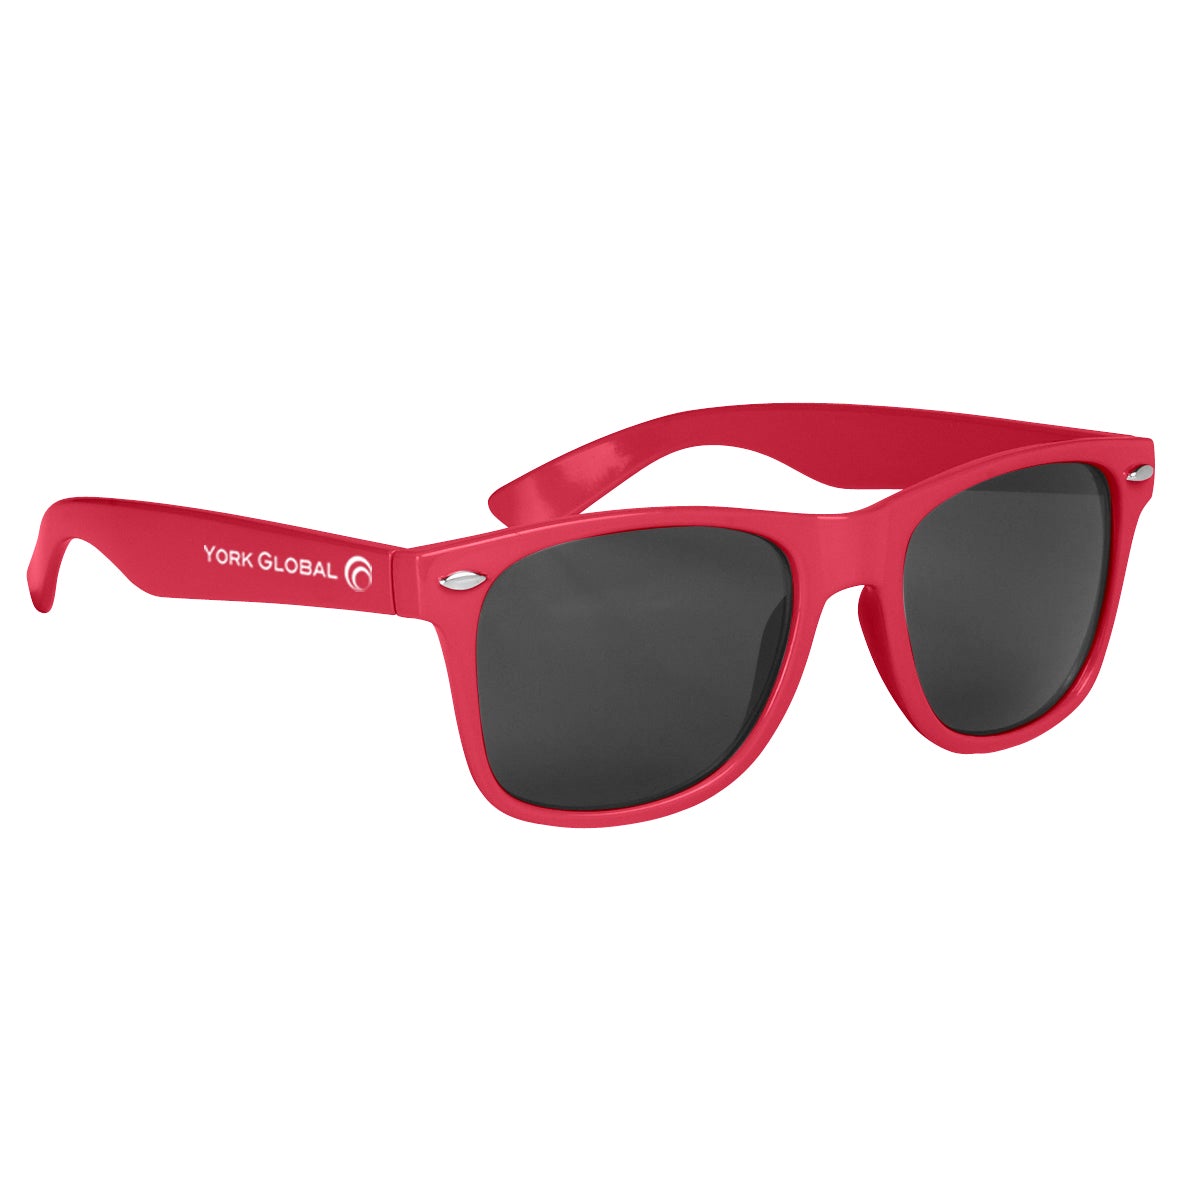 Malibu Sunglasses Sunglasses Hit Promo Red Single Color 